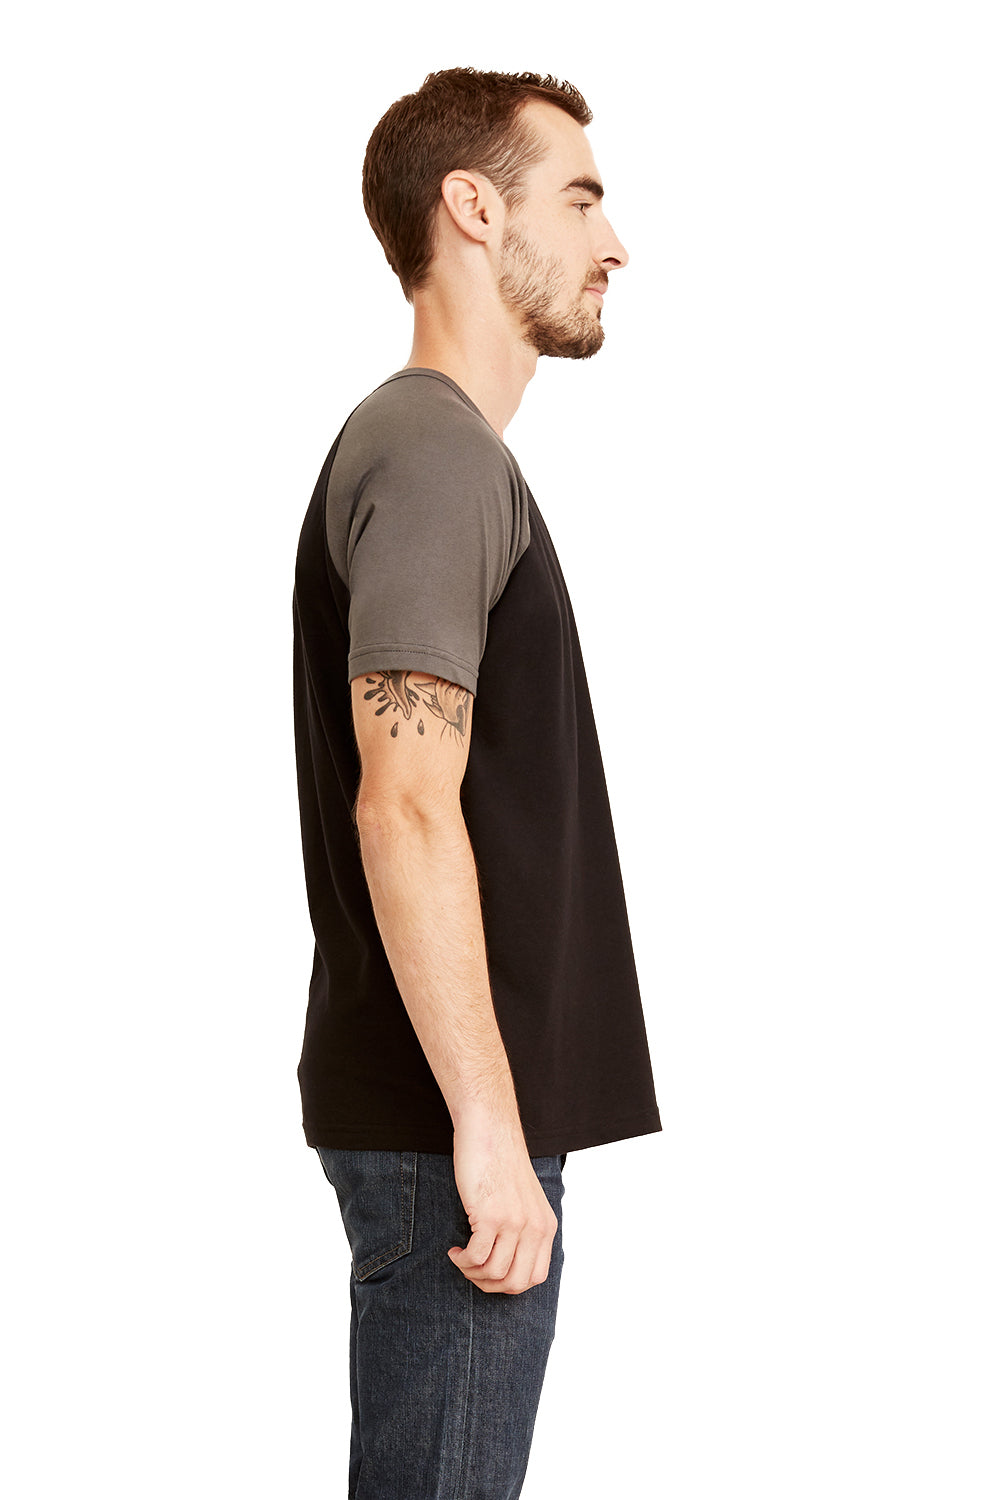 Next Level N3650 Mens Fine Jersey Short Sleeve Crewneck T-Shirt Warm Grey/Black Side